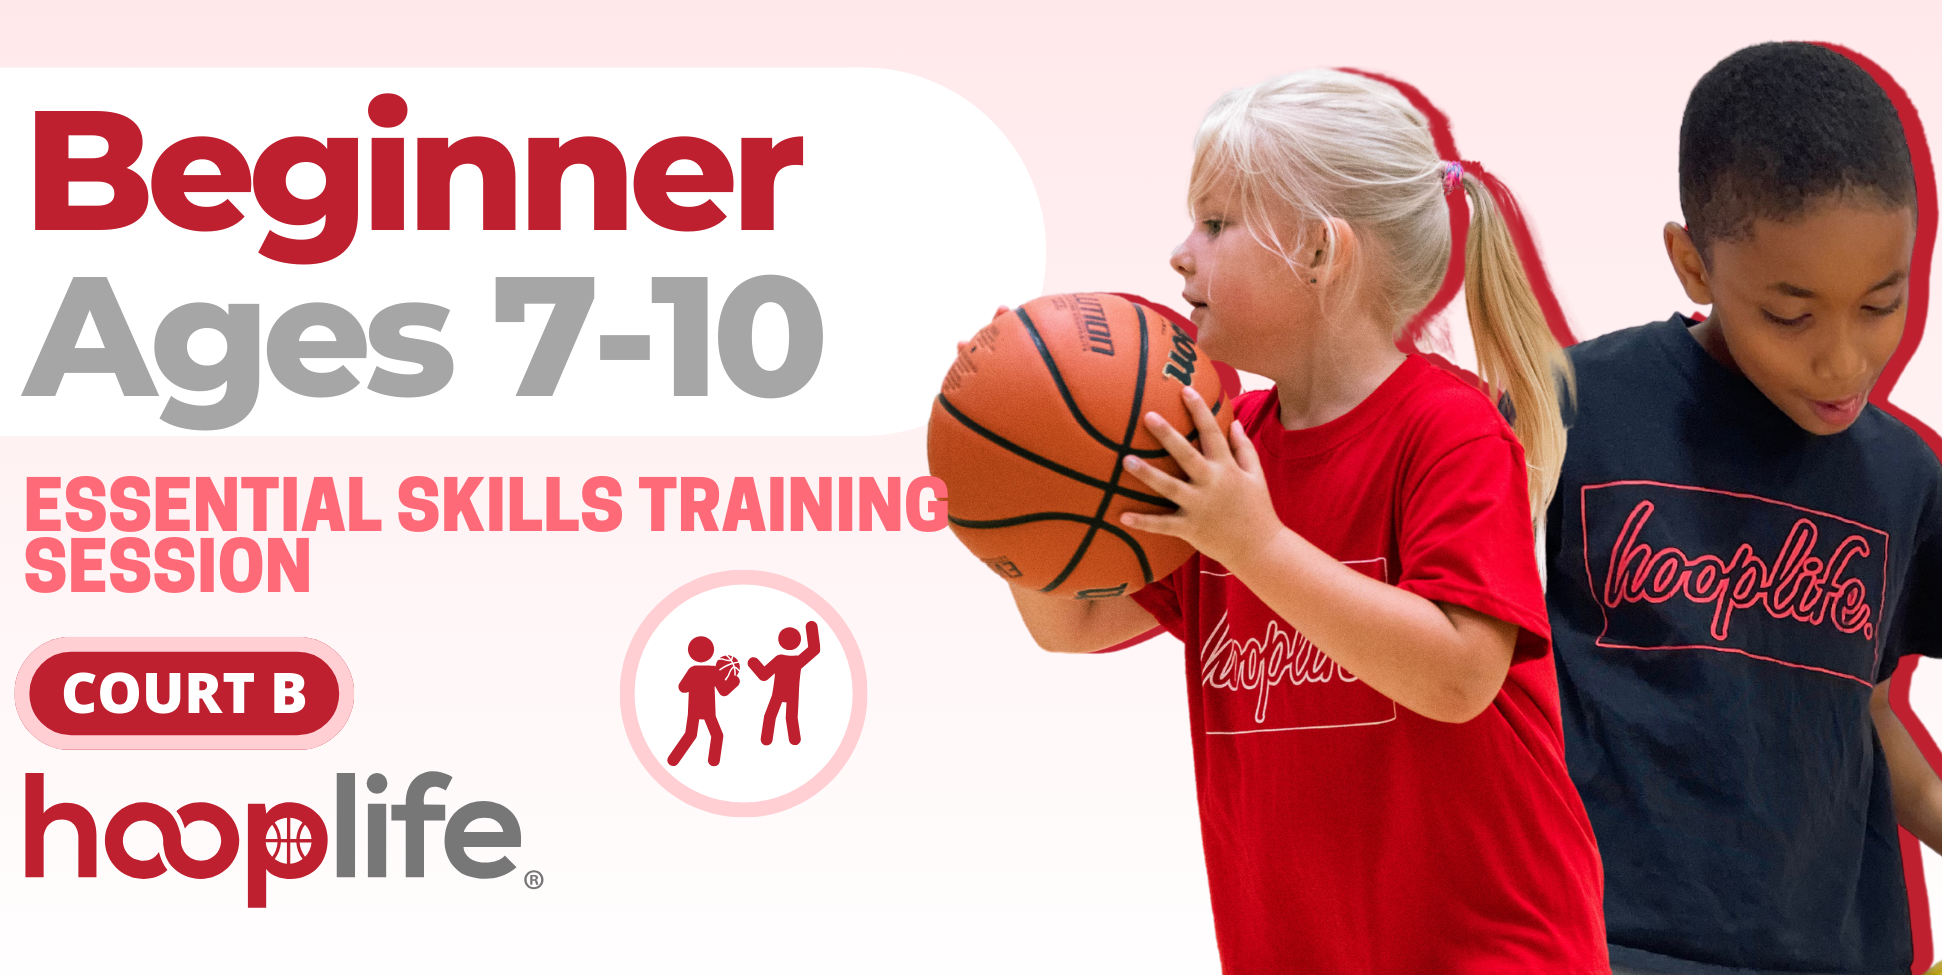 Ages 7-10 Beginner Essential Skills Training Session